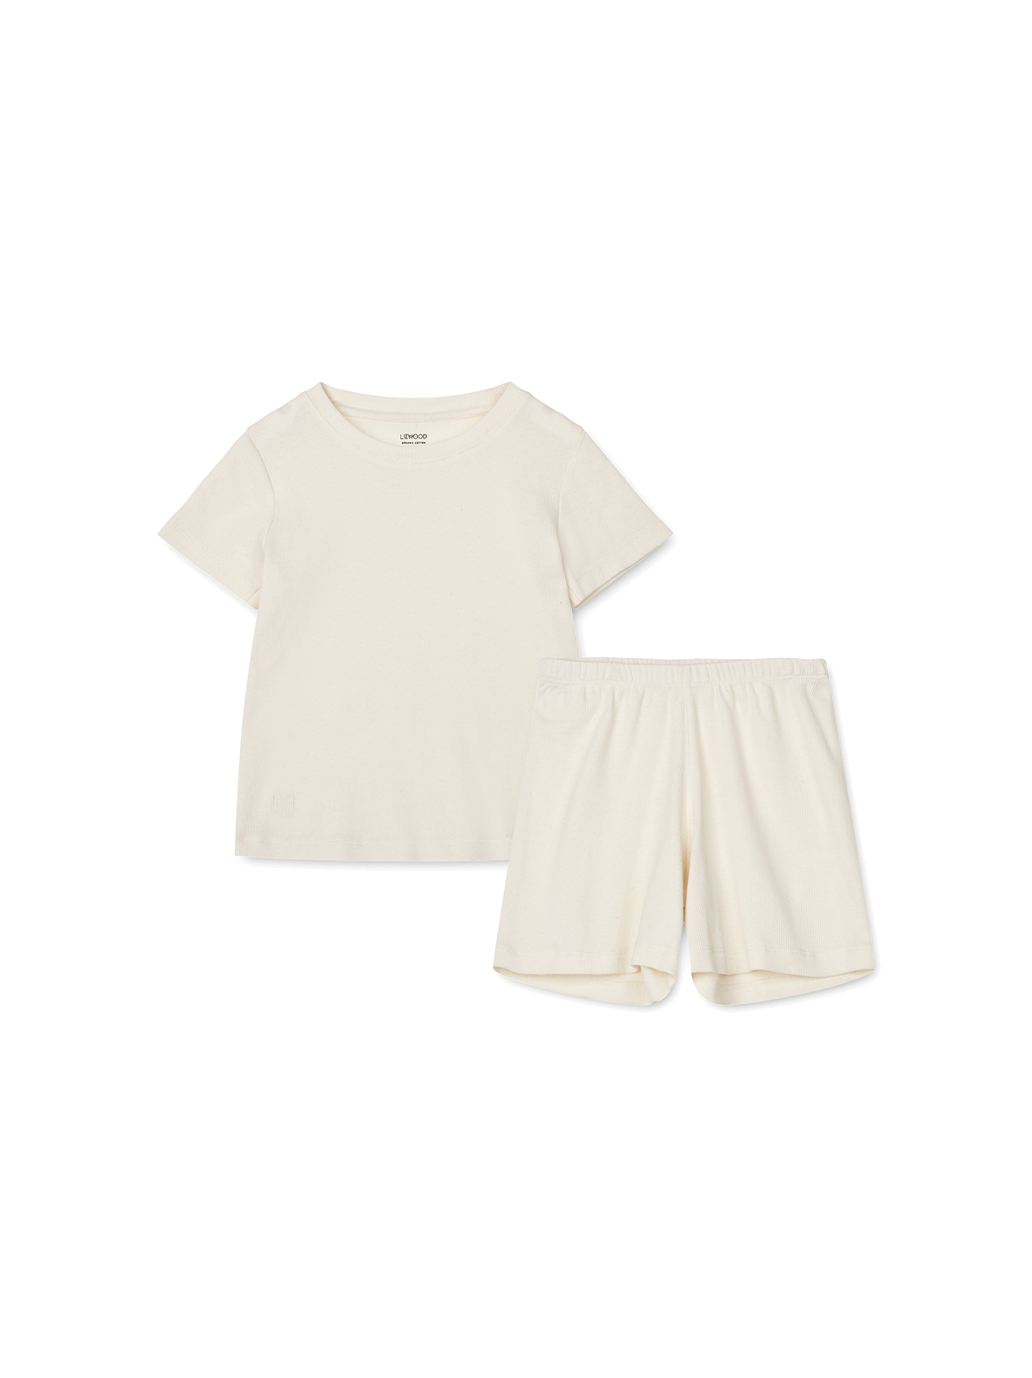 Ilford cotton summer pyjamas set